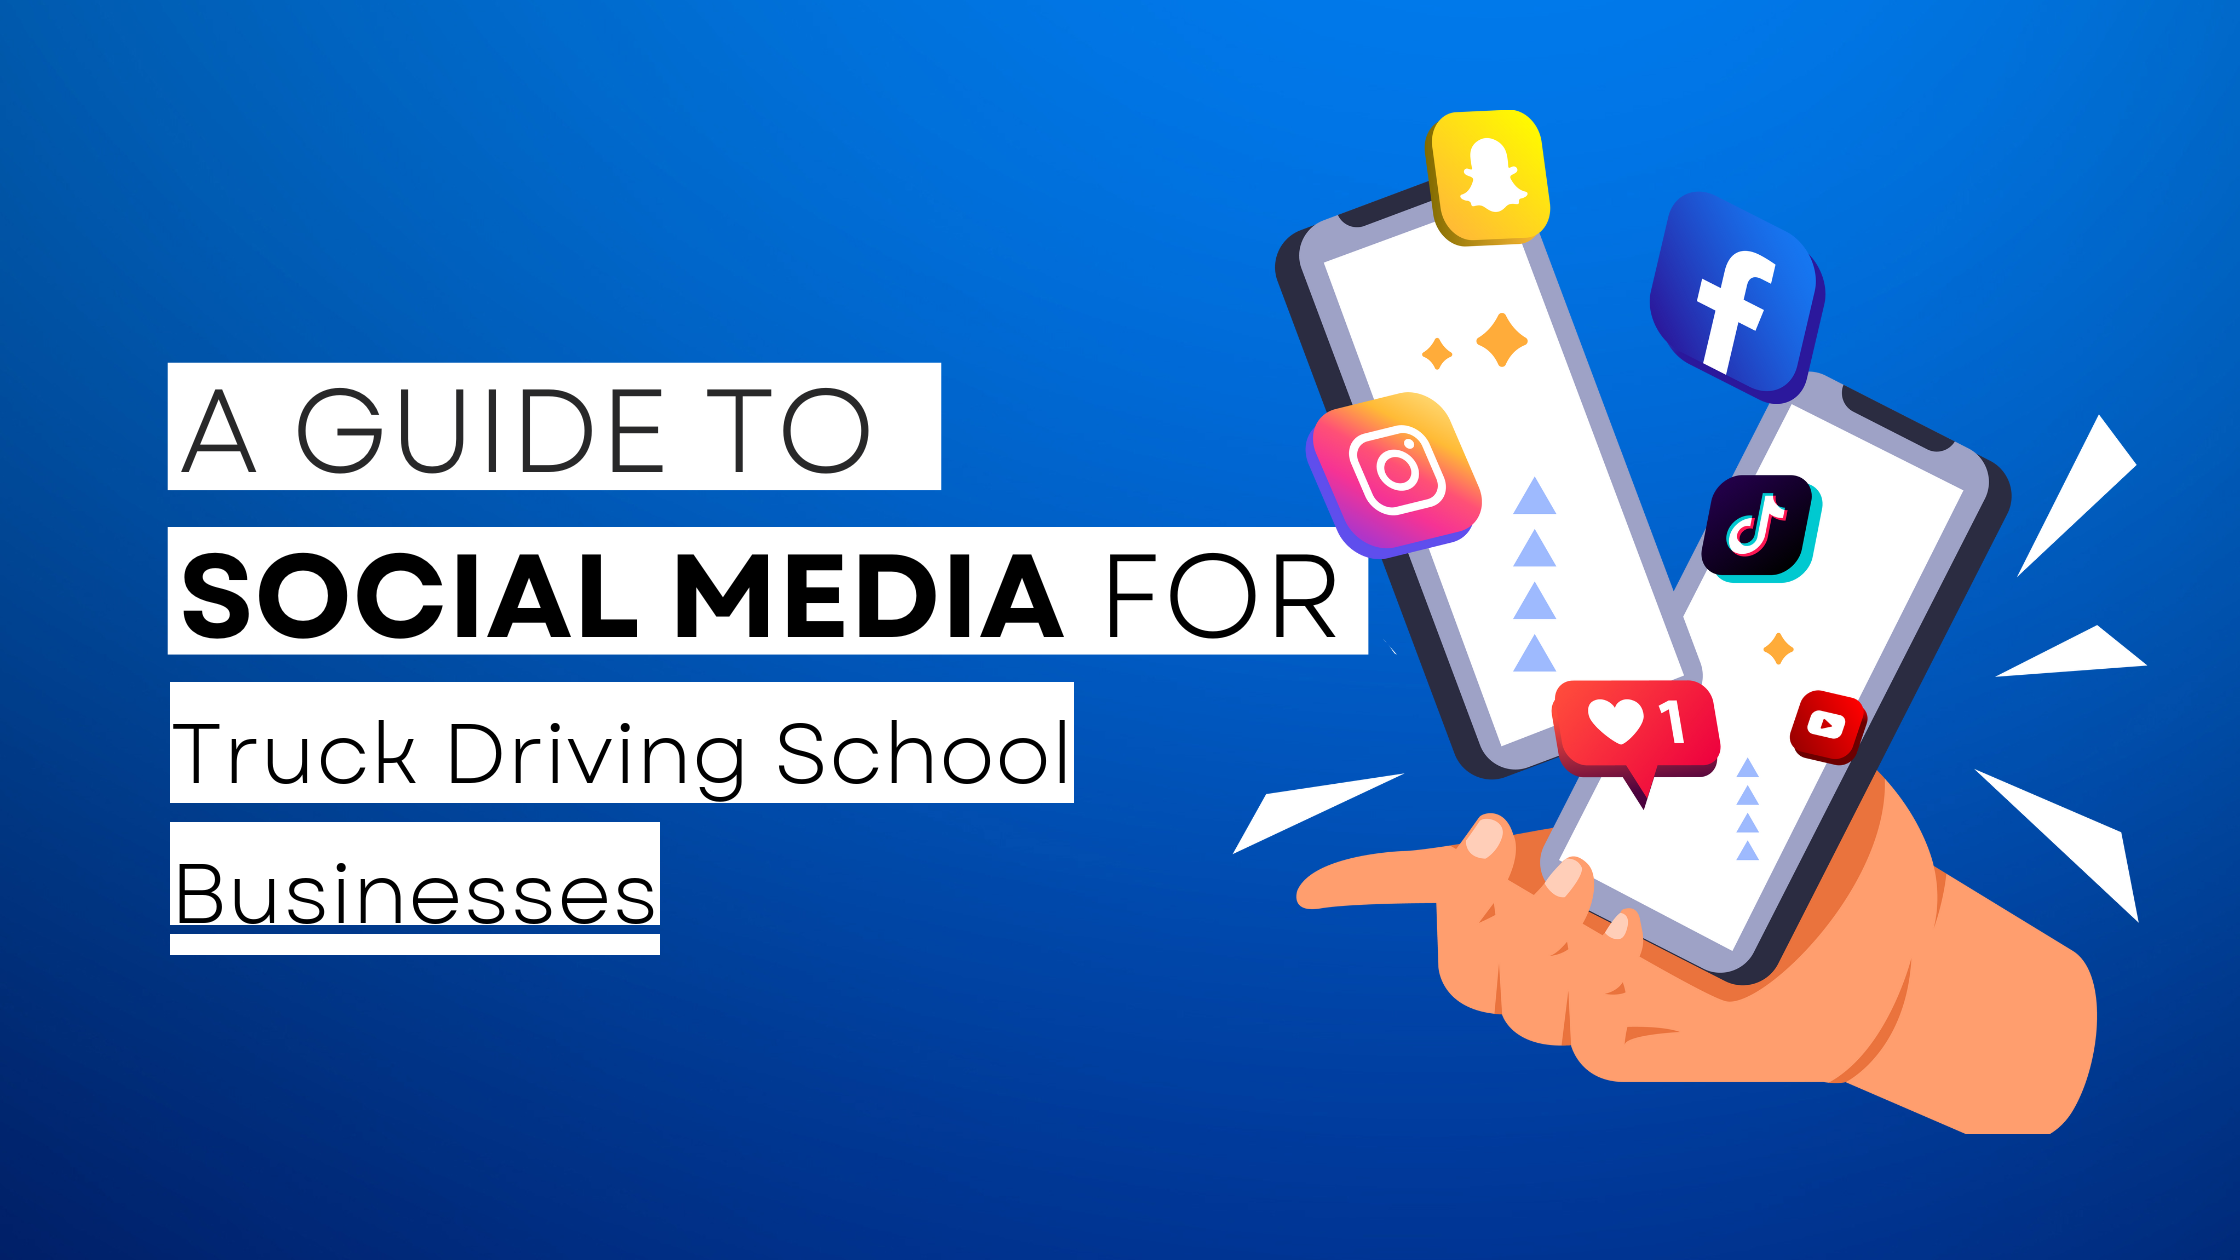 How to start Truck Driving School  on social media